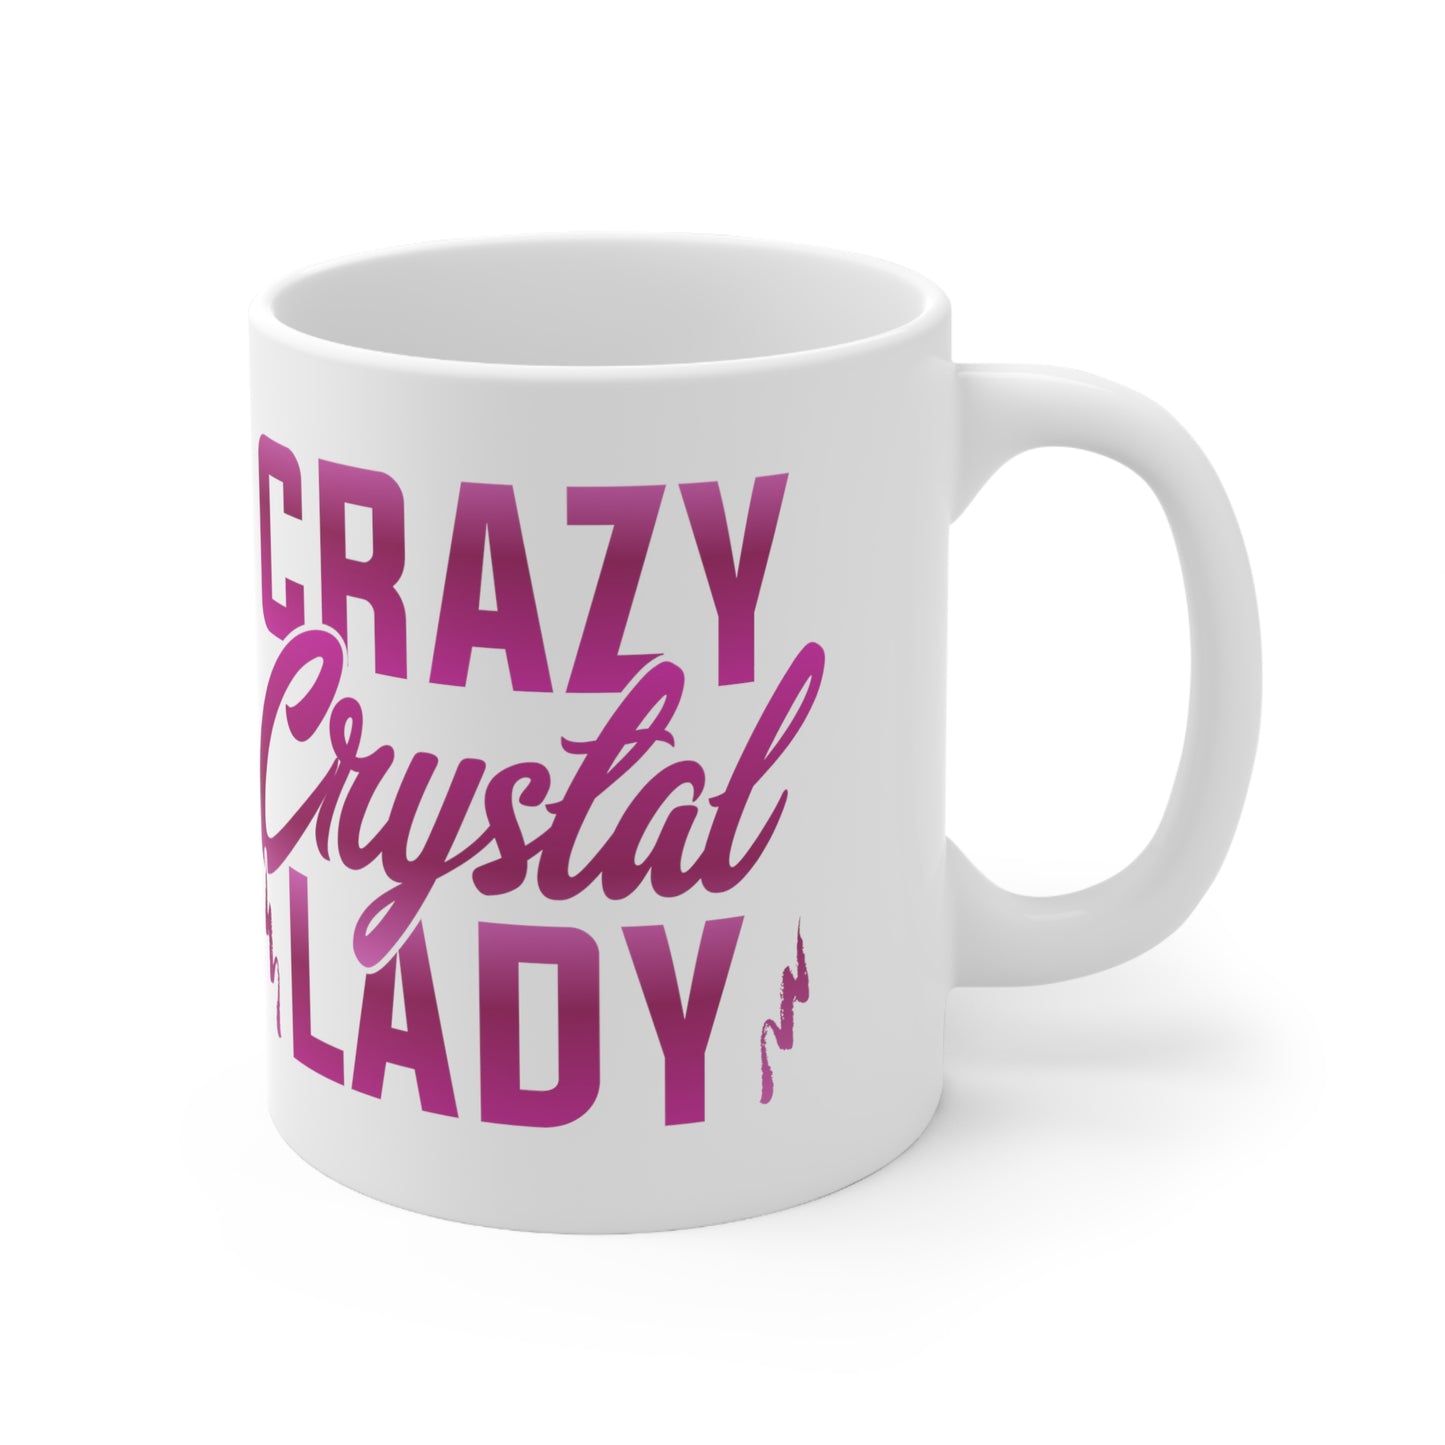 Crazy Crystal Lady Ceramic Mug 11oz